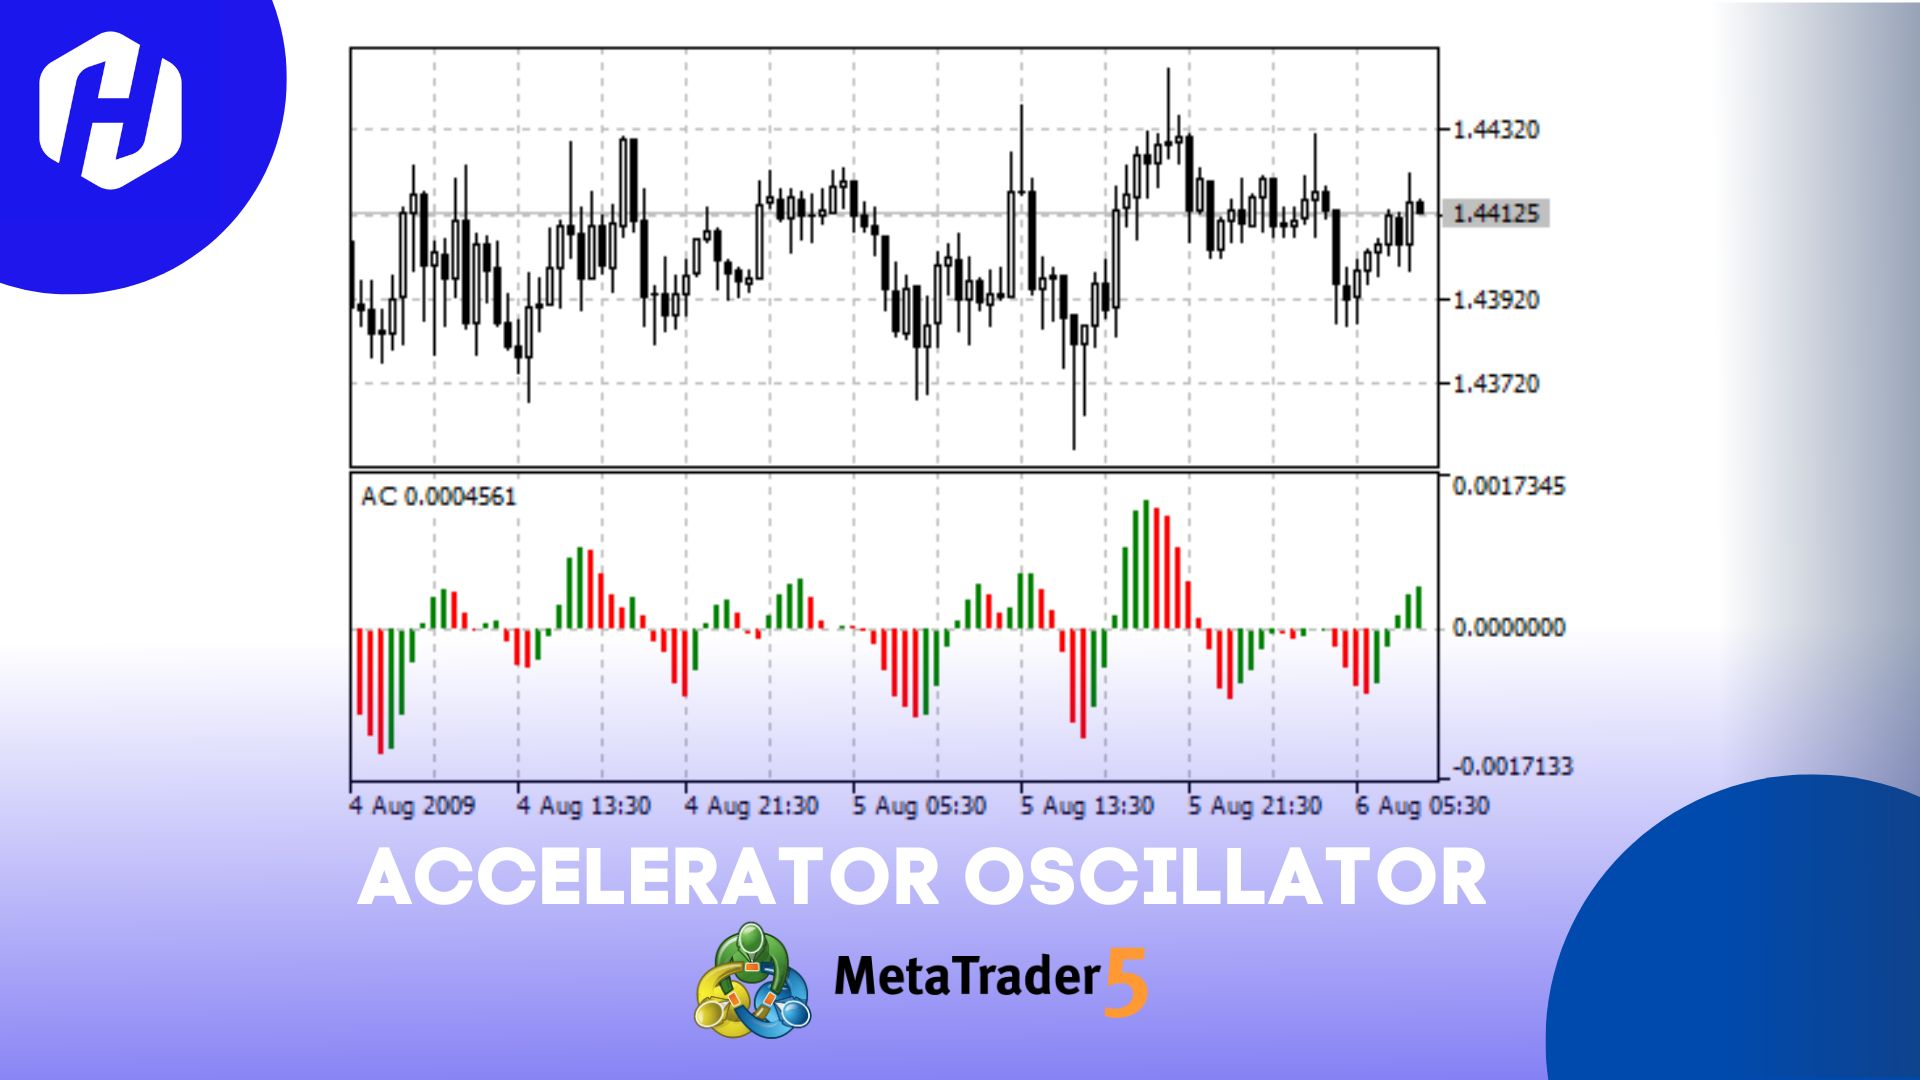 Baca Momentum Pasar dengan Accelerator Oscillator